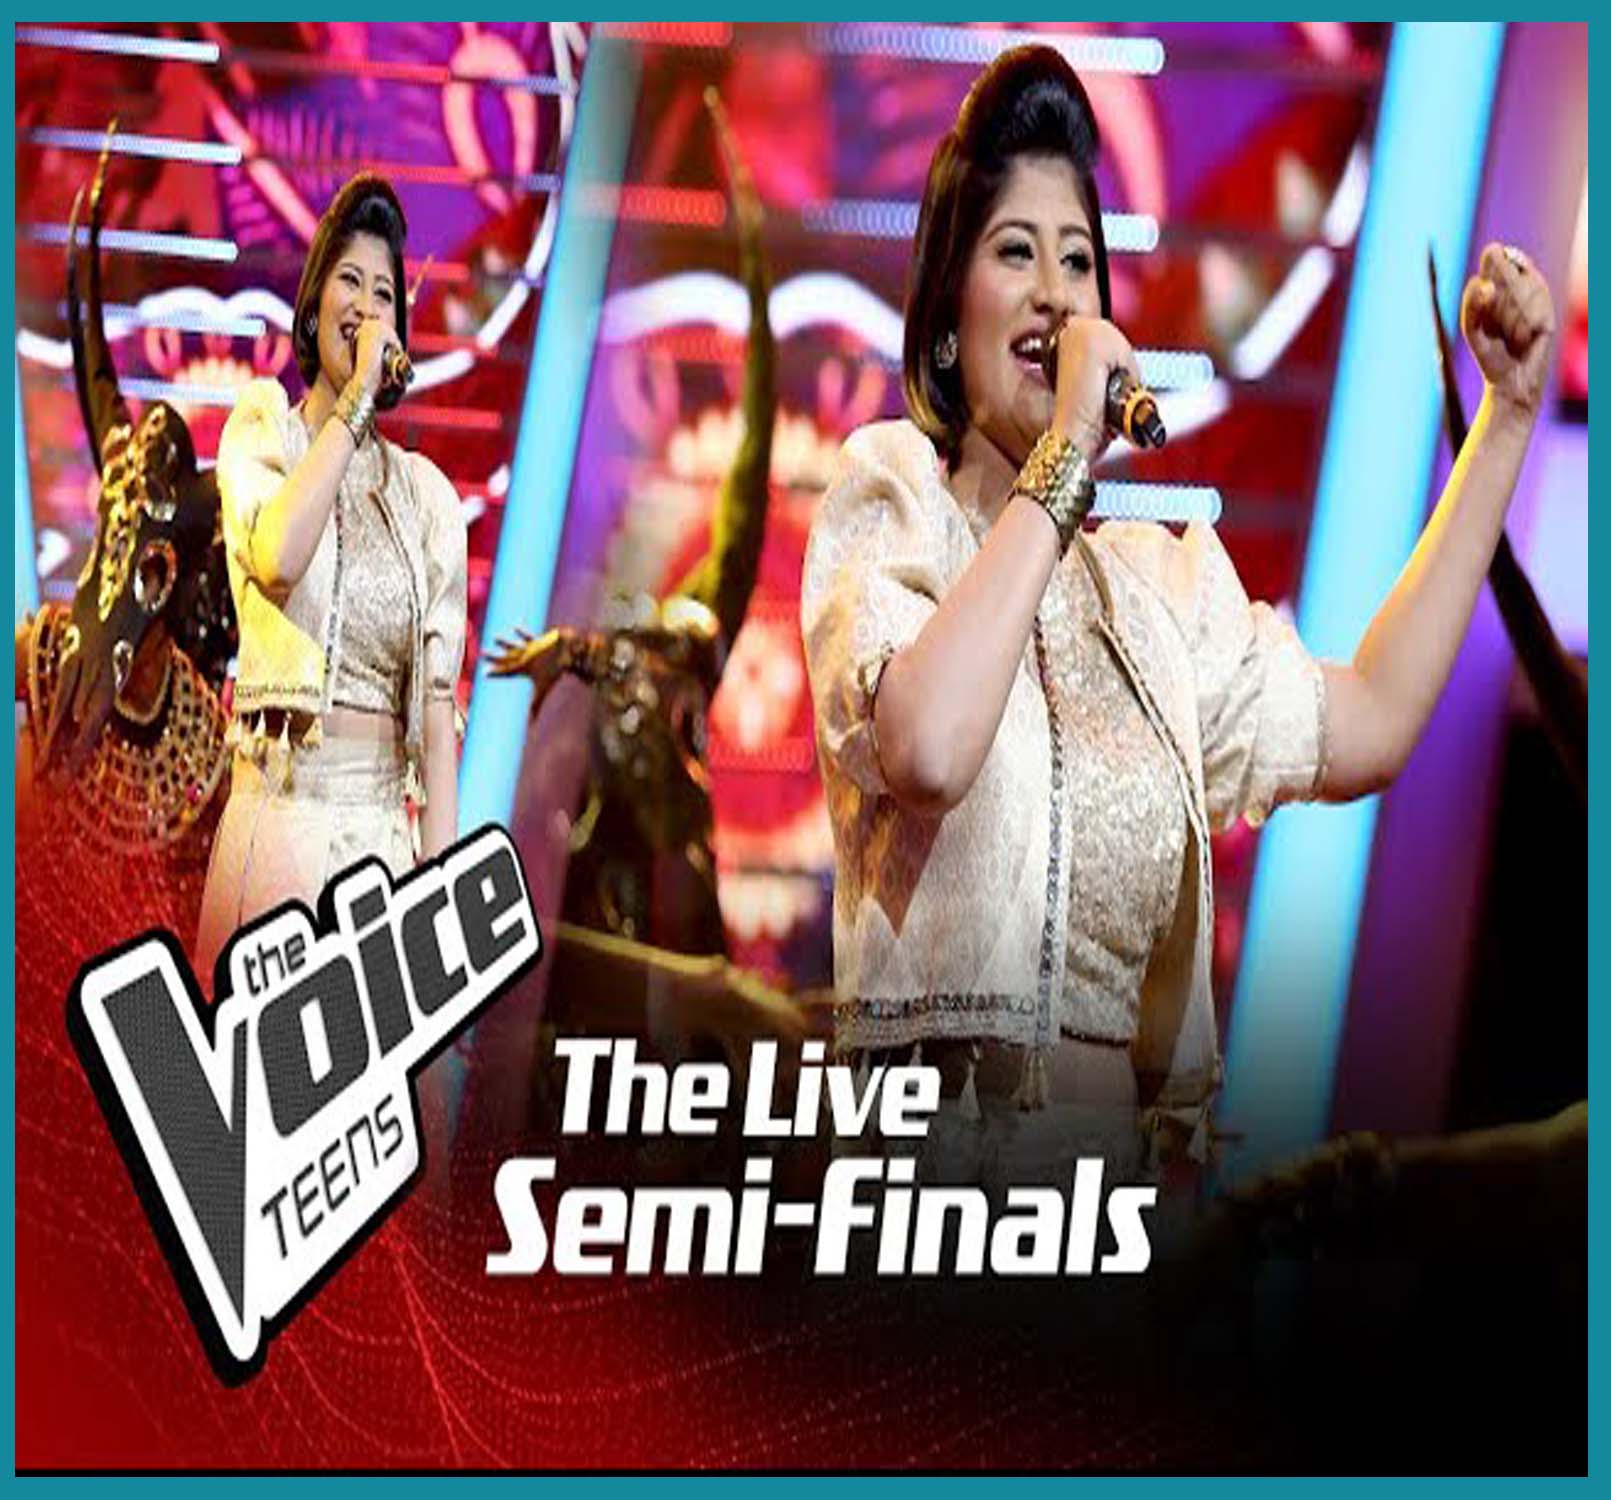 Ambaruwo (The Voice Teens Semi Finals)